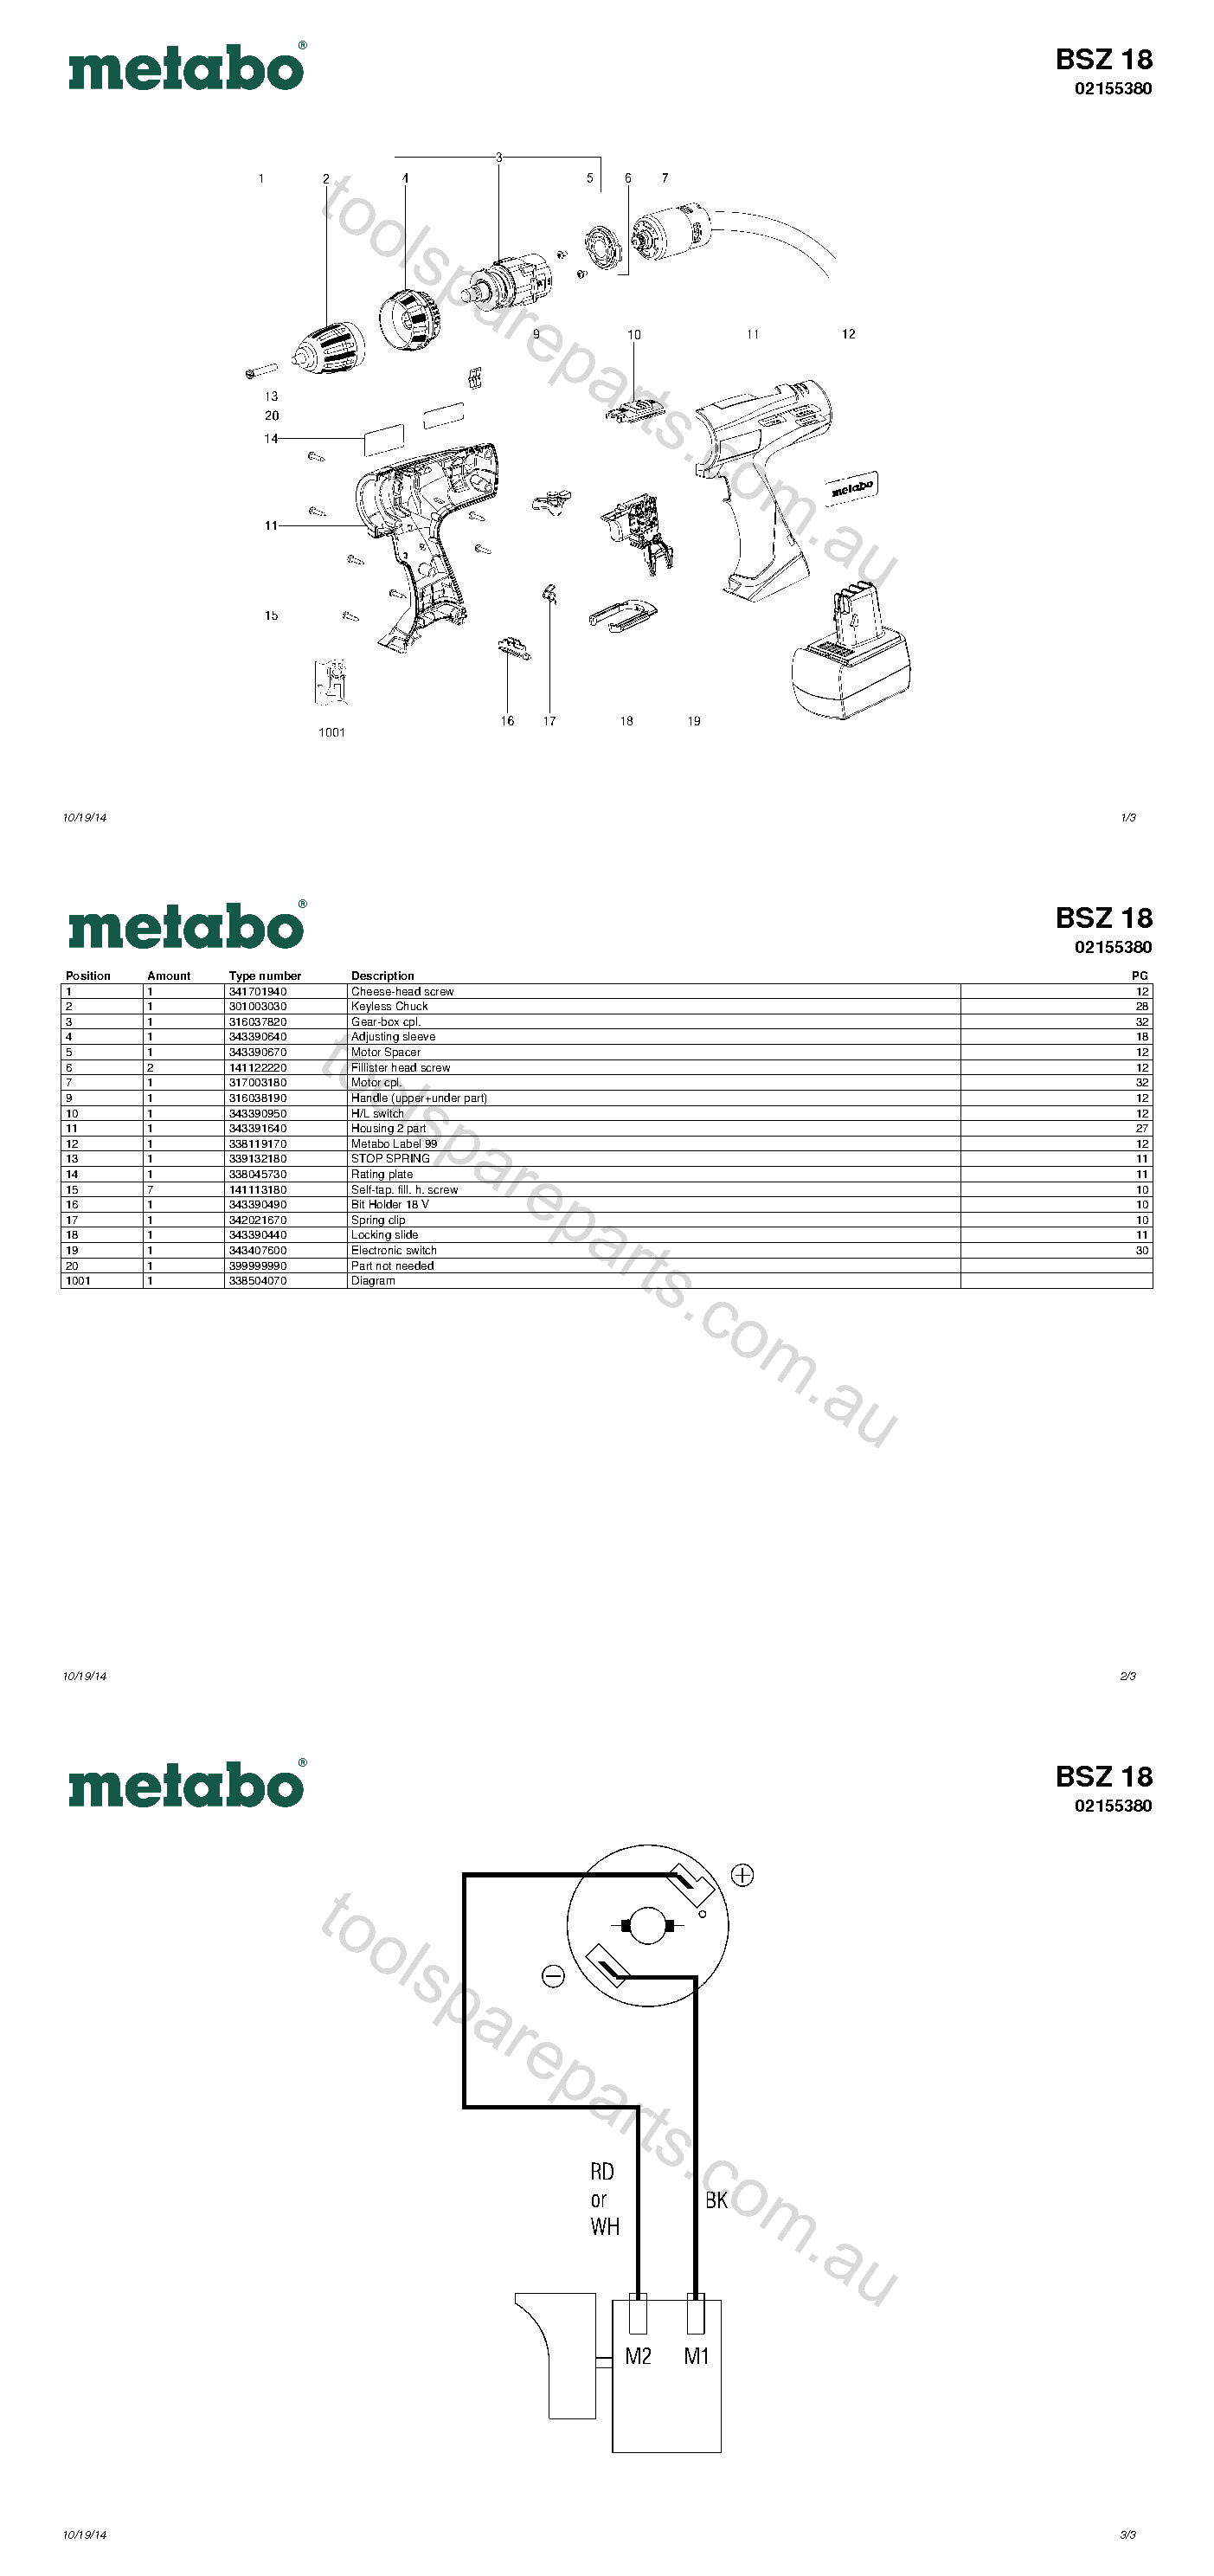 Metabo BSZ 18 02155380  Diagram 1